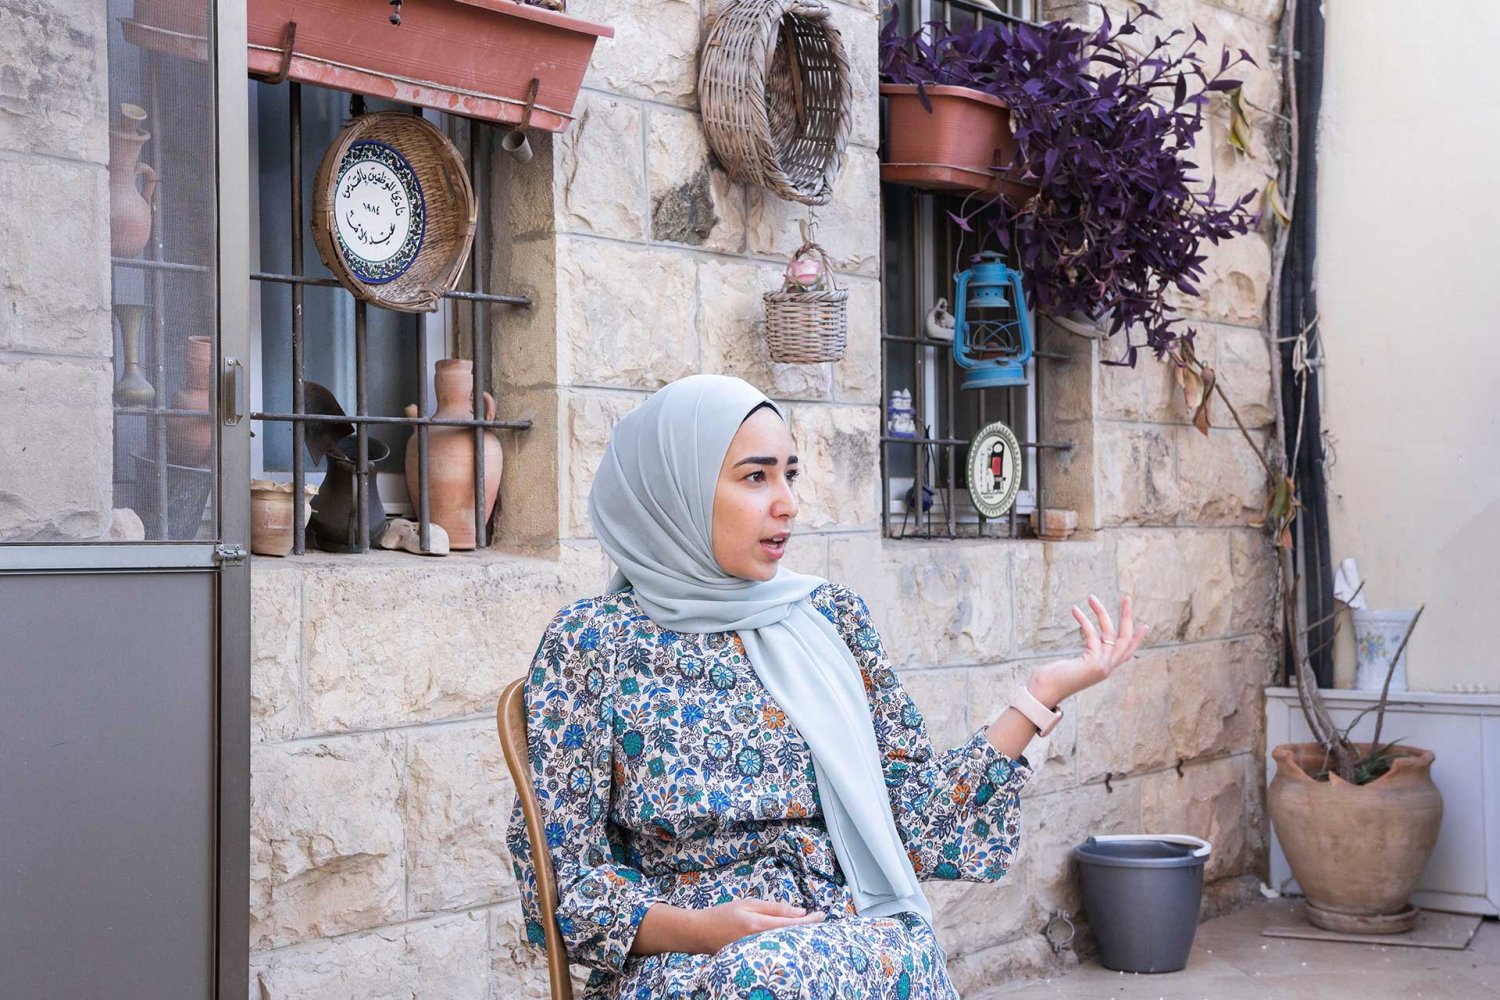 Asala Abu Hasna, at her family home in Sheikh Jarrah